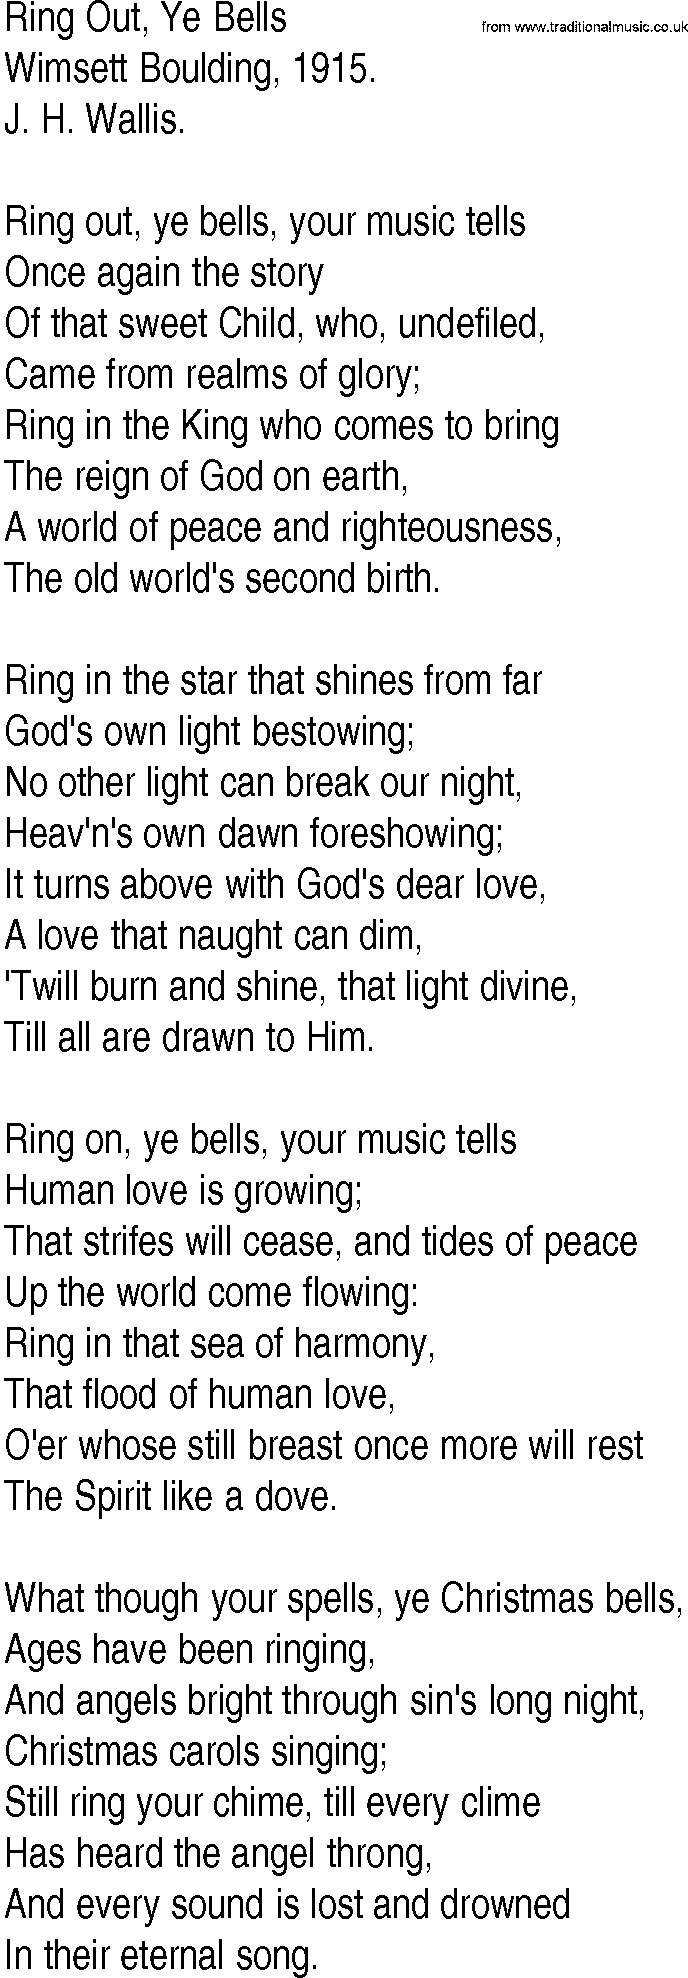 Hymn and Gospel Song: Ring Out, Ye Bells by Wimsett Boulding lyrics